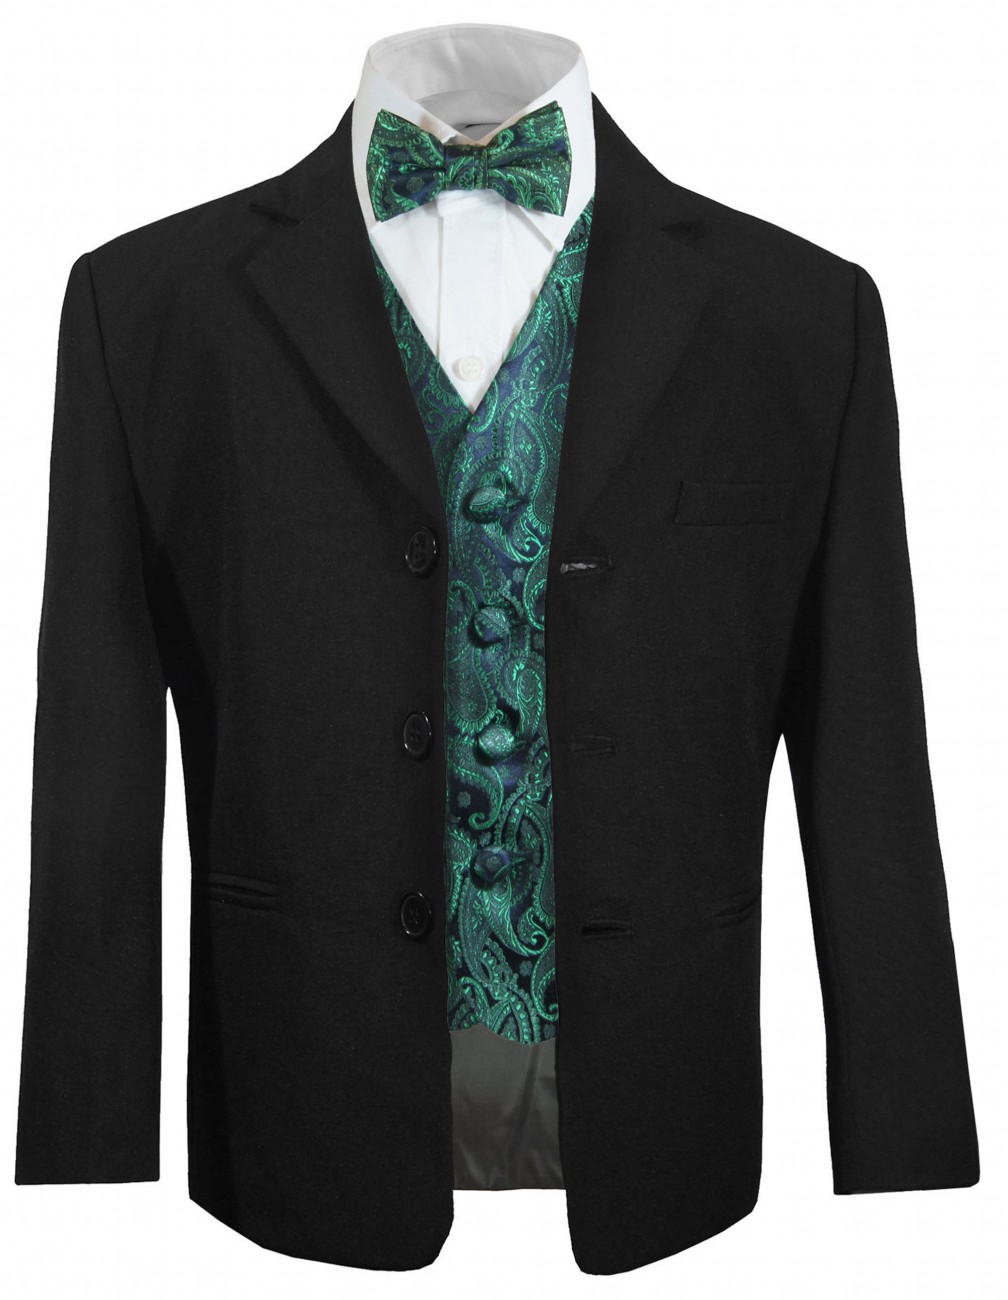 New Boy Toddler Kid Formal Wedding Tuxedo Suit Vest Free Green Tie 6PC sz 5-14 